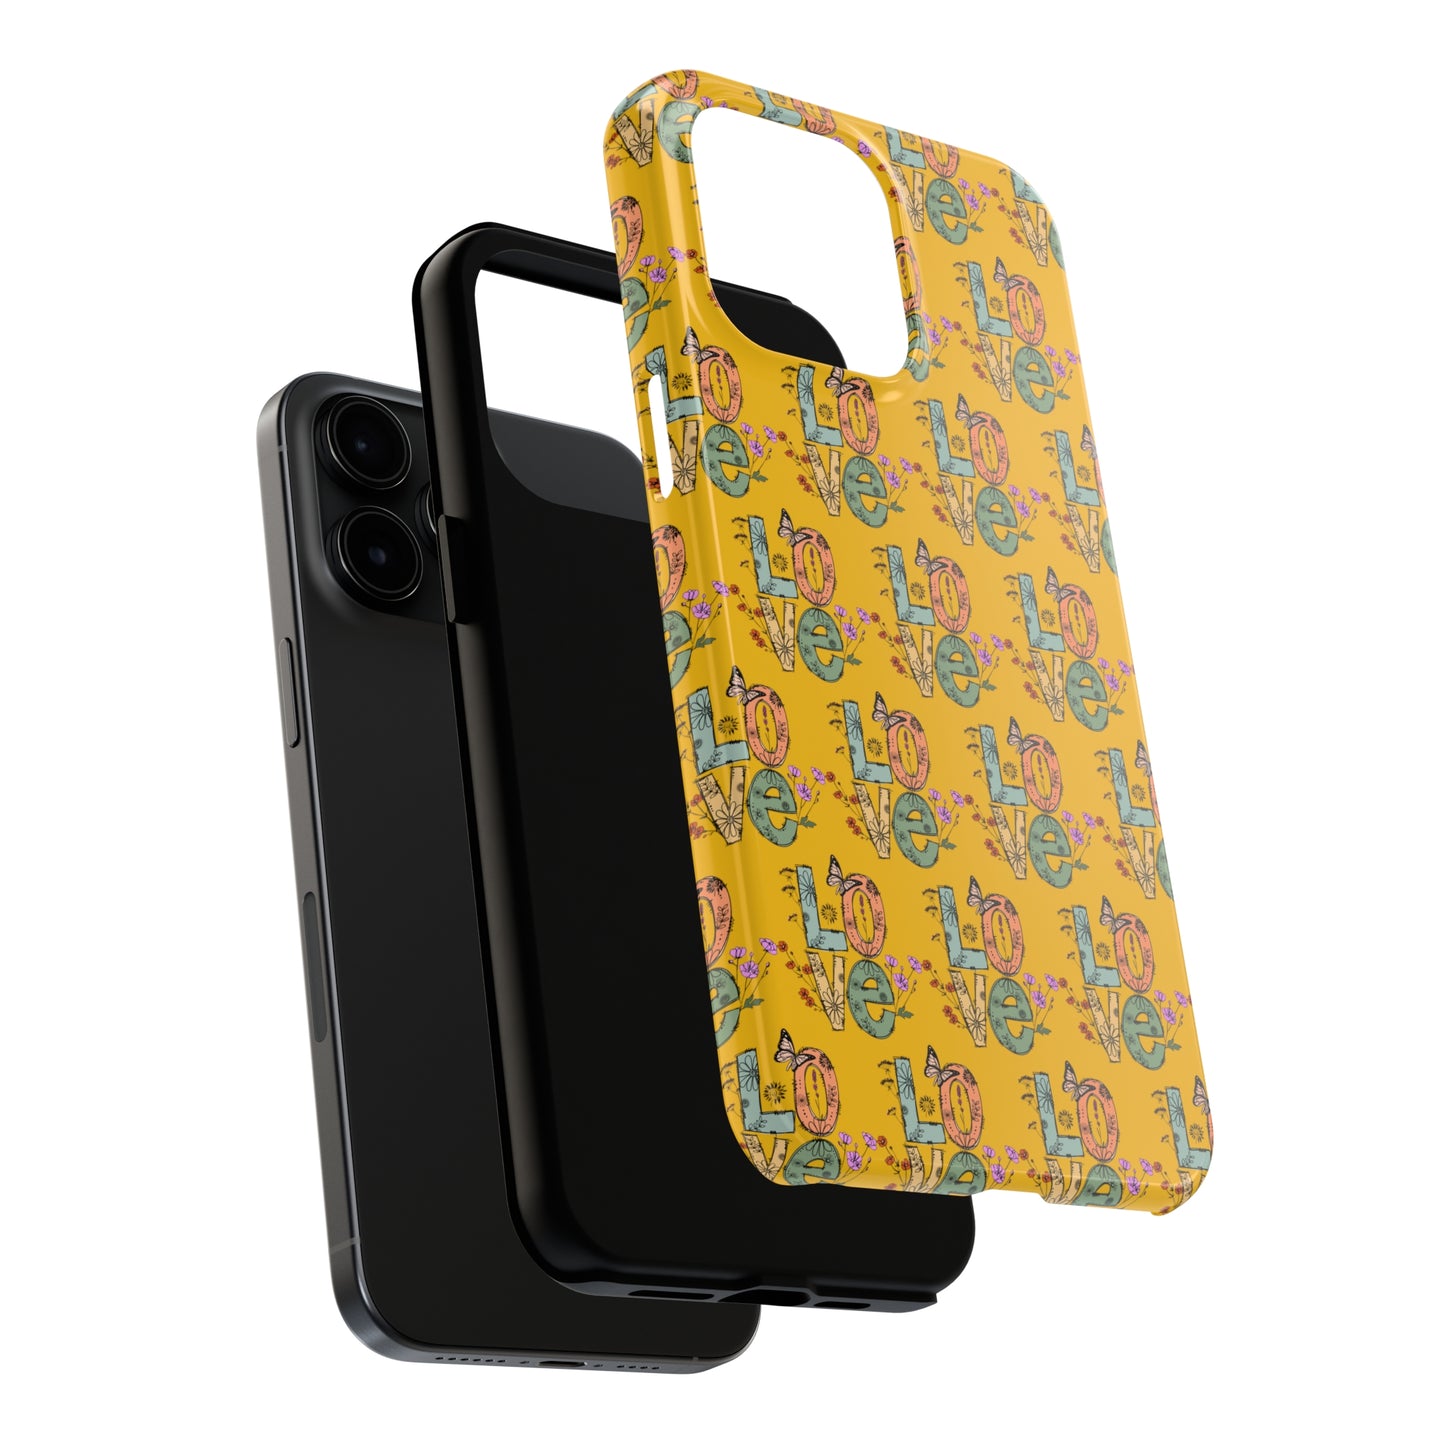 Nature LOVE: iPhone Tough Case Design - Wireless Charging - Superior Protection - Original Designs by TheGlassyLass.com